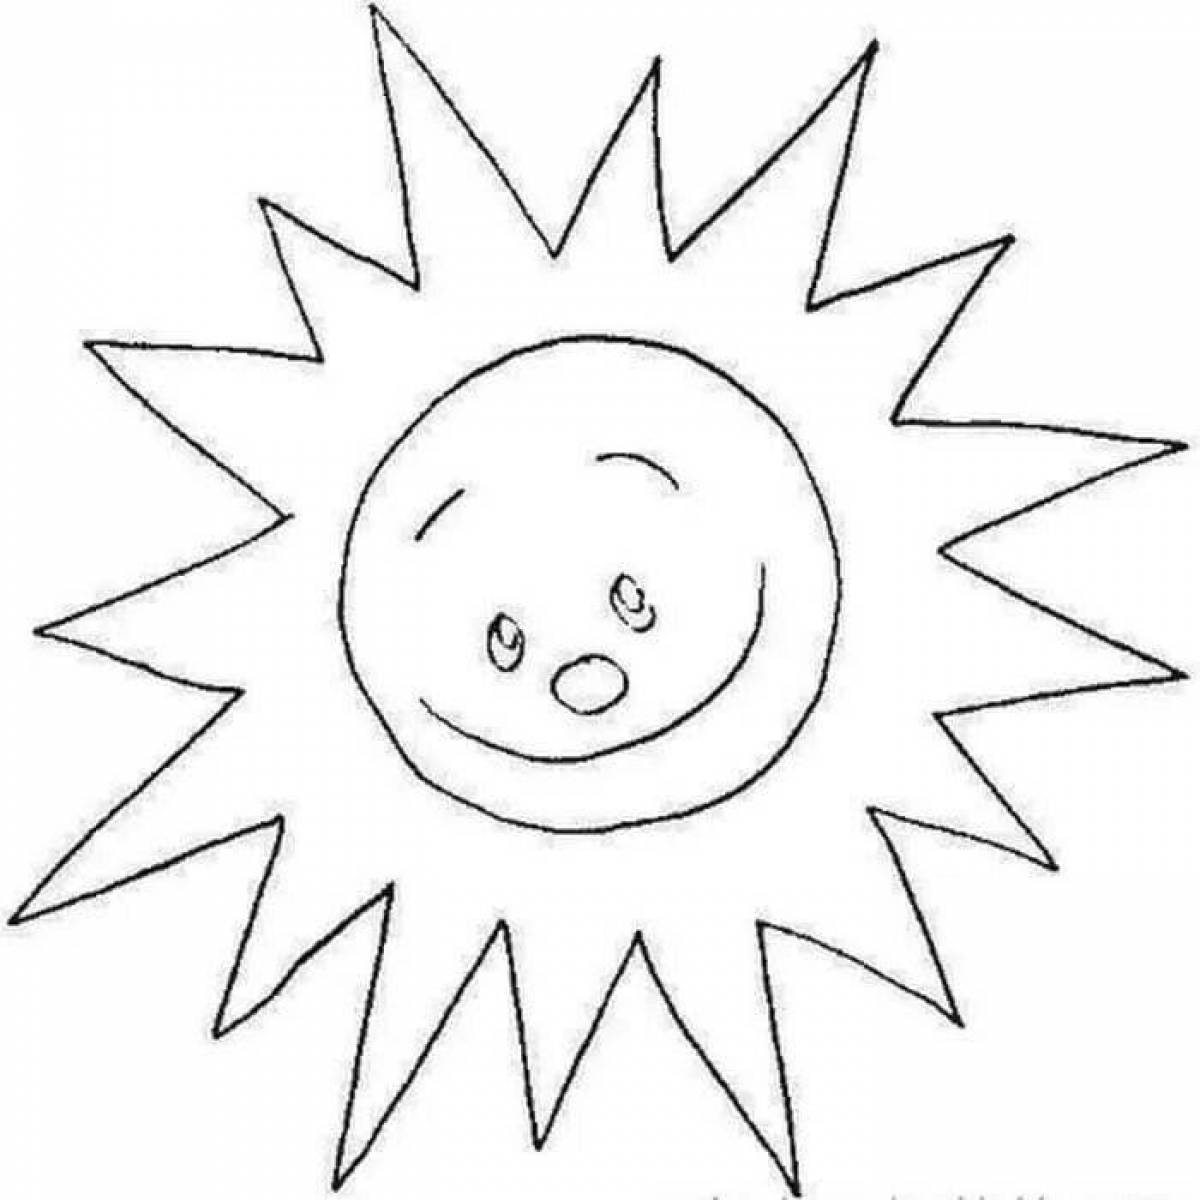 Забавная раскраска солнце для детей 2-3 лет